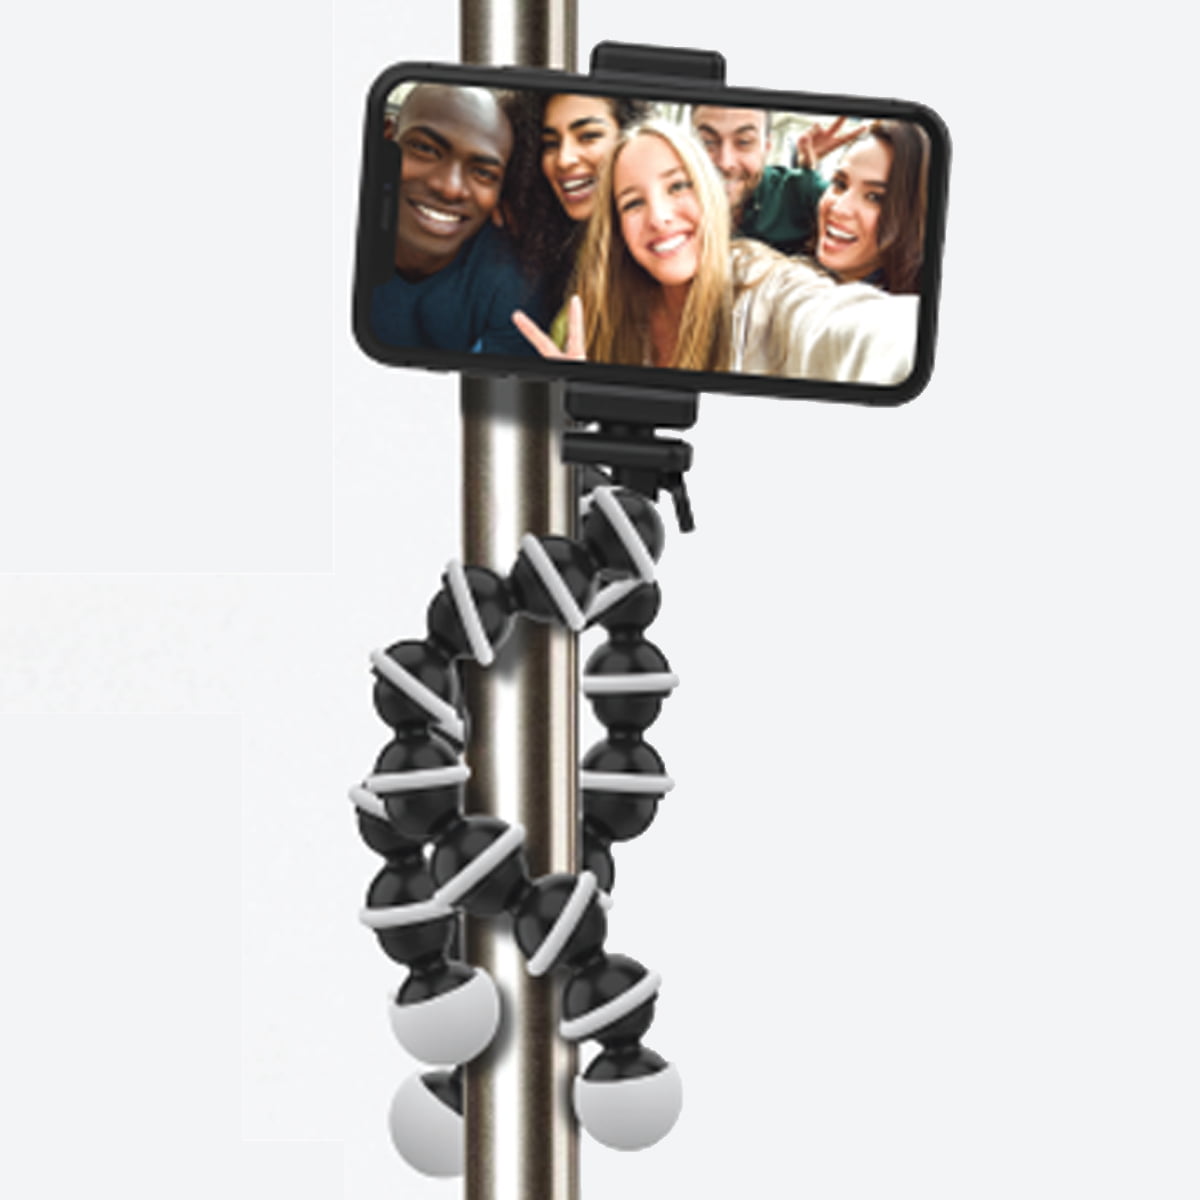 Premier Universal Phone Holder and Selfie Stick, Flexipods Multi-Flex Tripod, Rotates 360